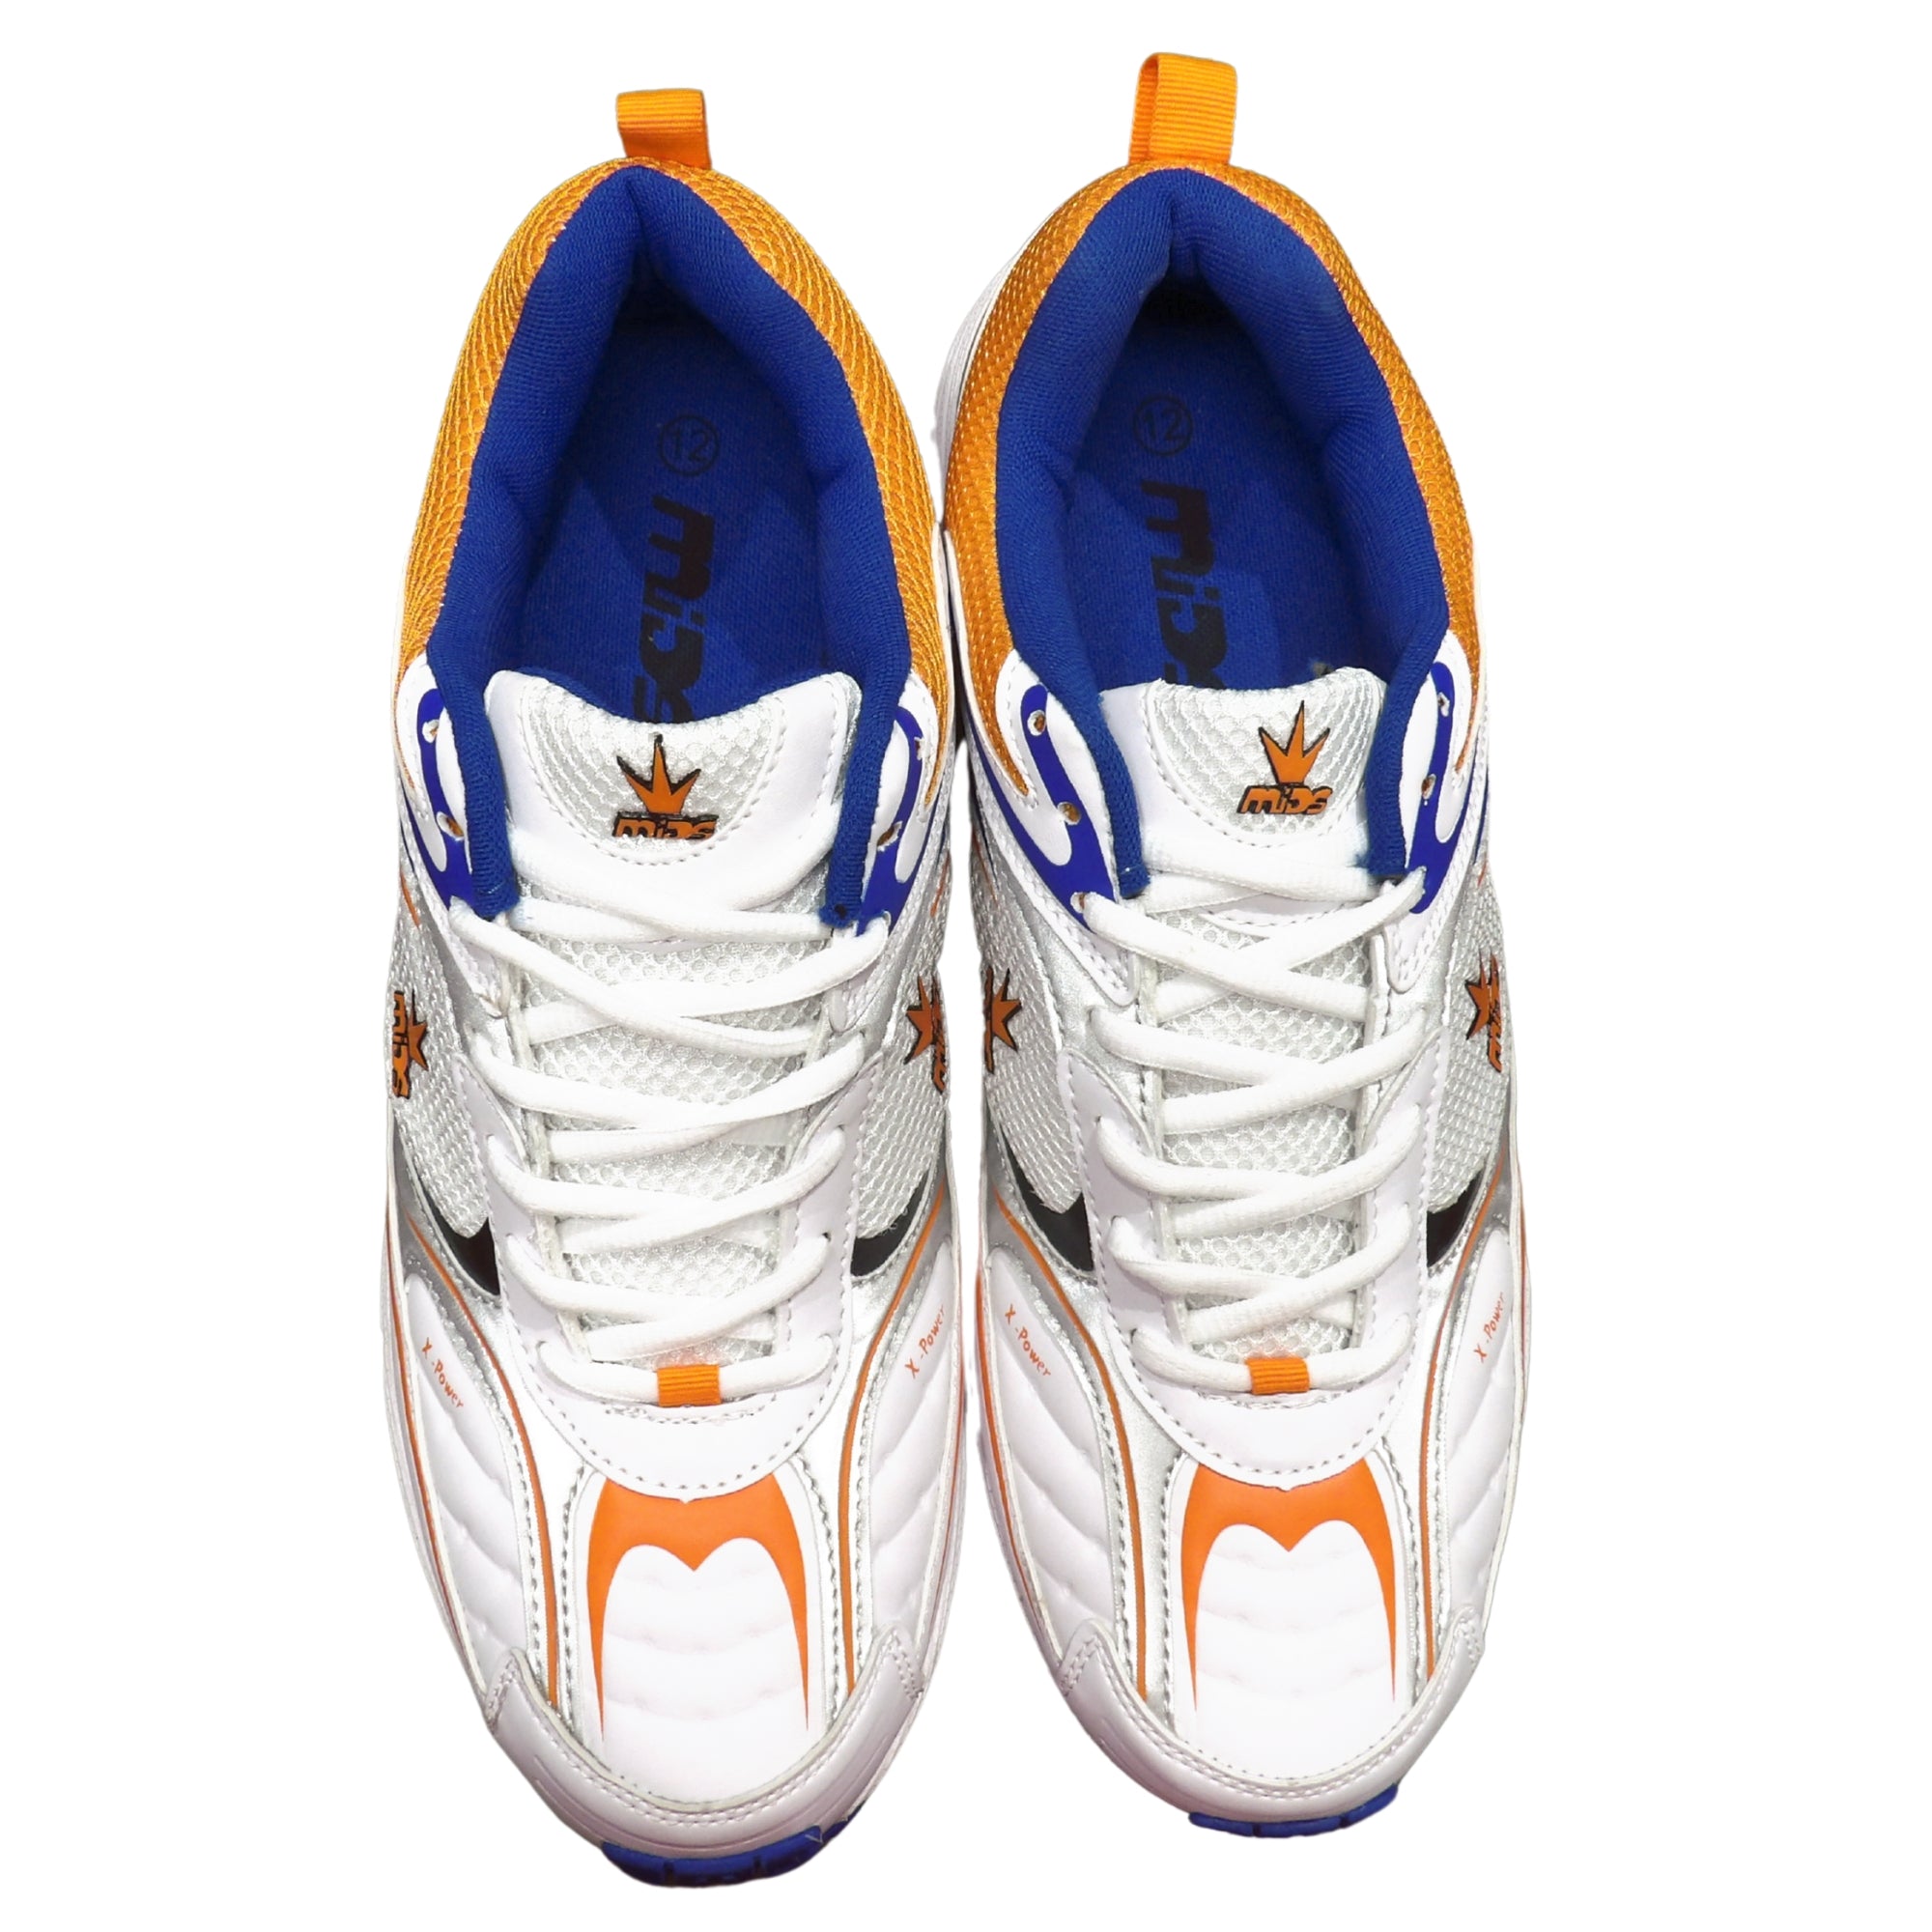 Mids Cricket Shoes, Model X Power - White/Orange/Royal Blue